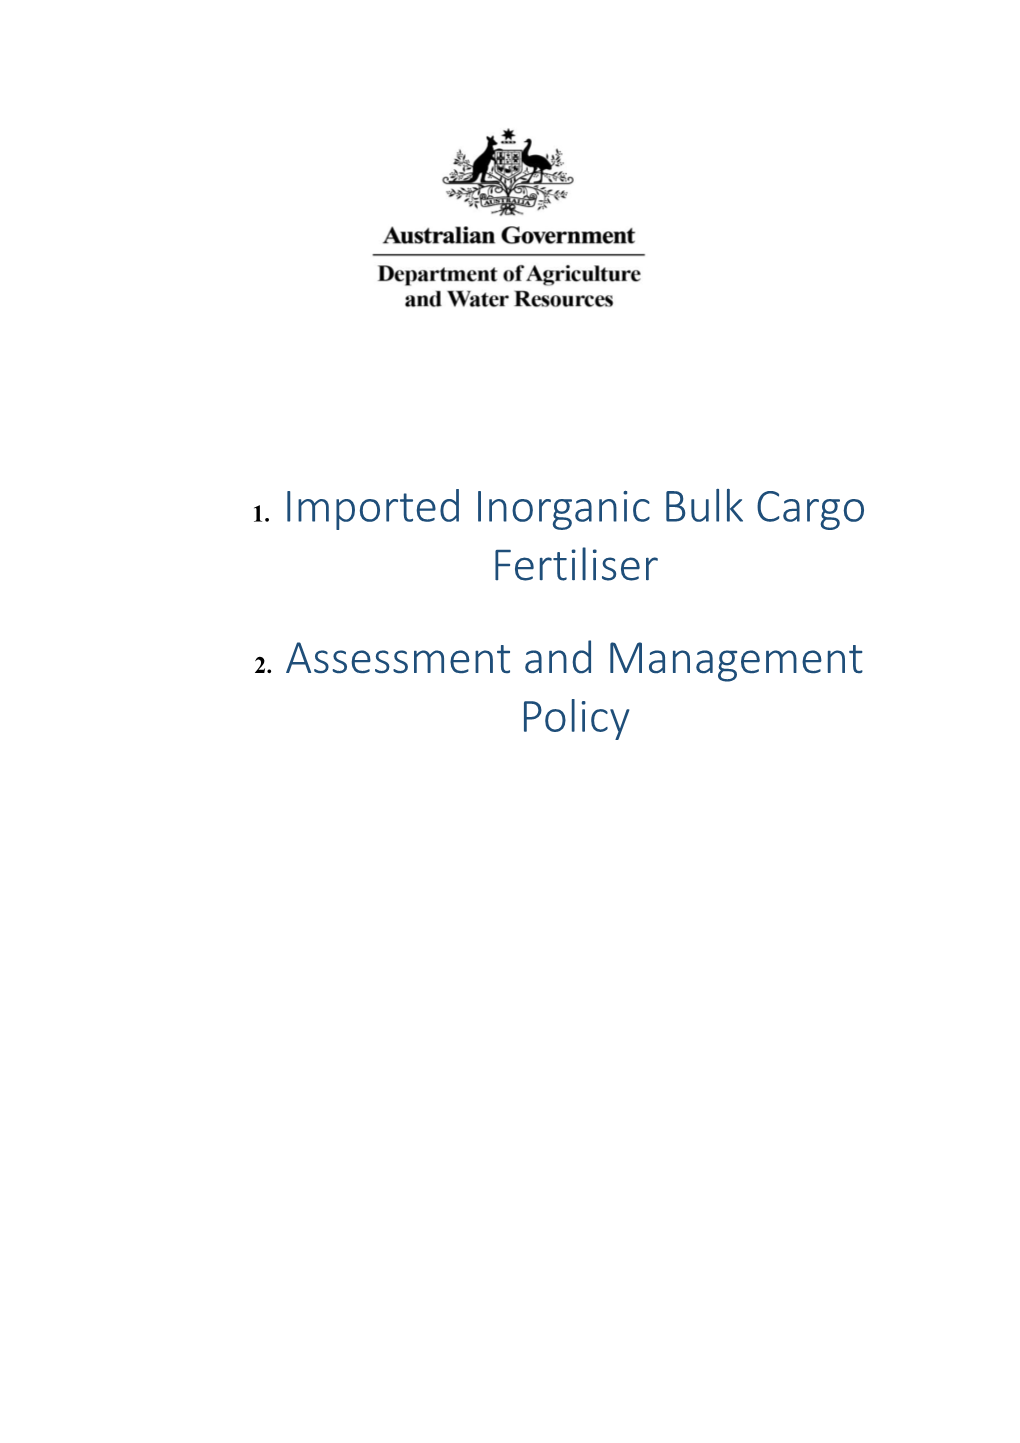 Imported Inorganic Bulk Cargo Fertiliser